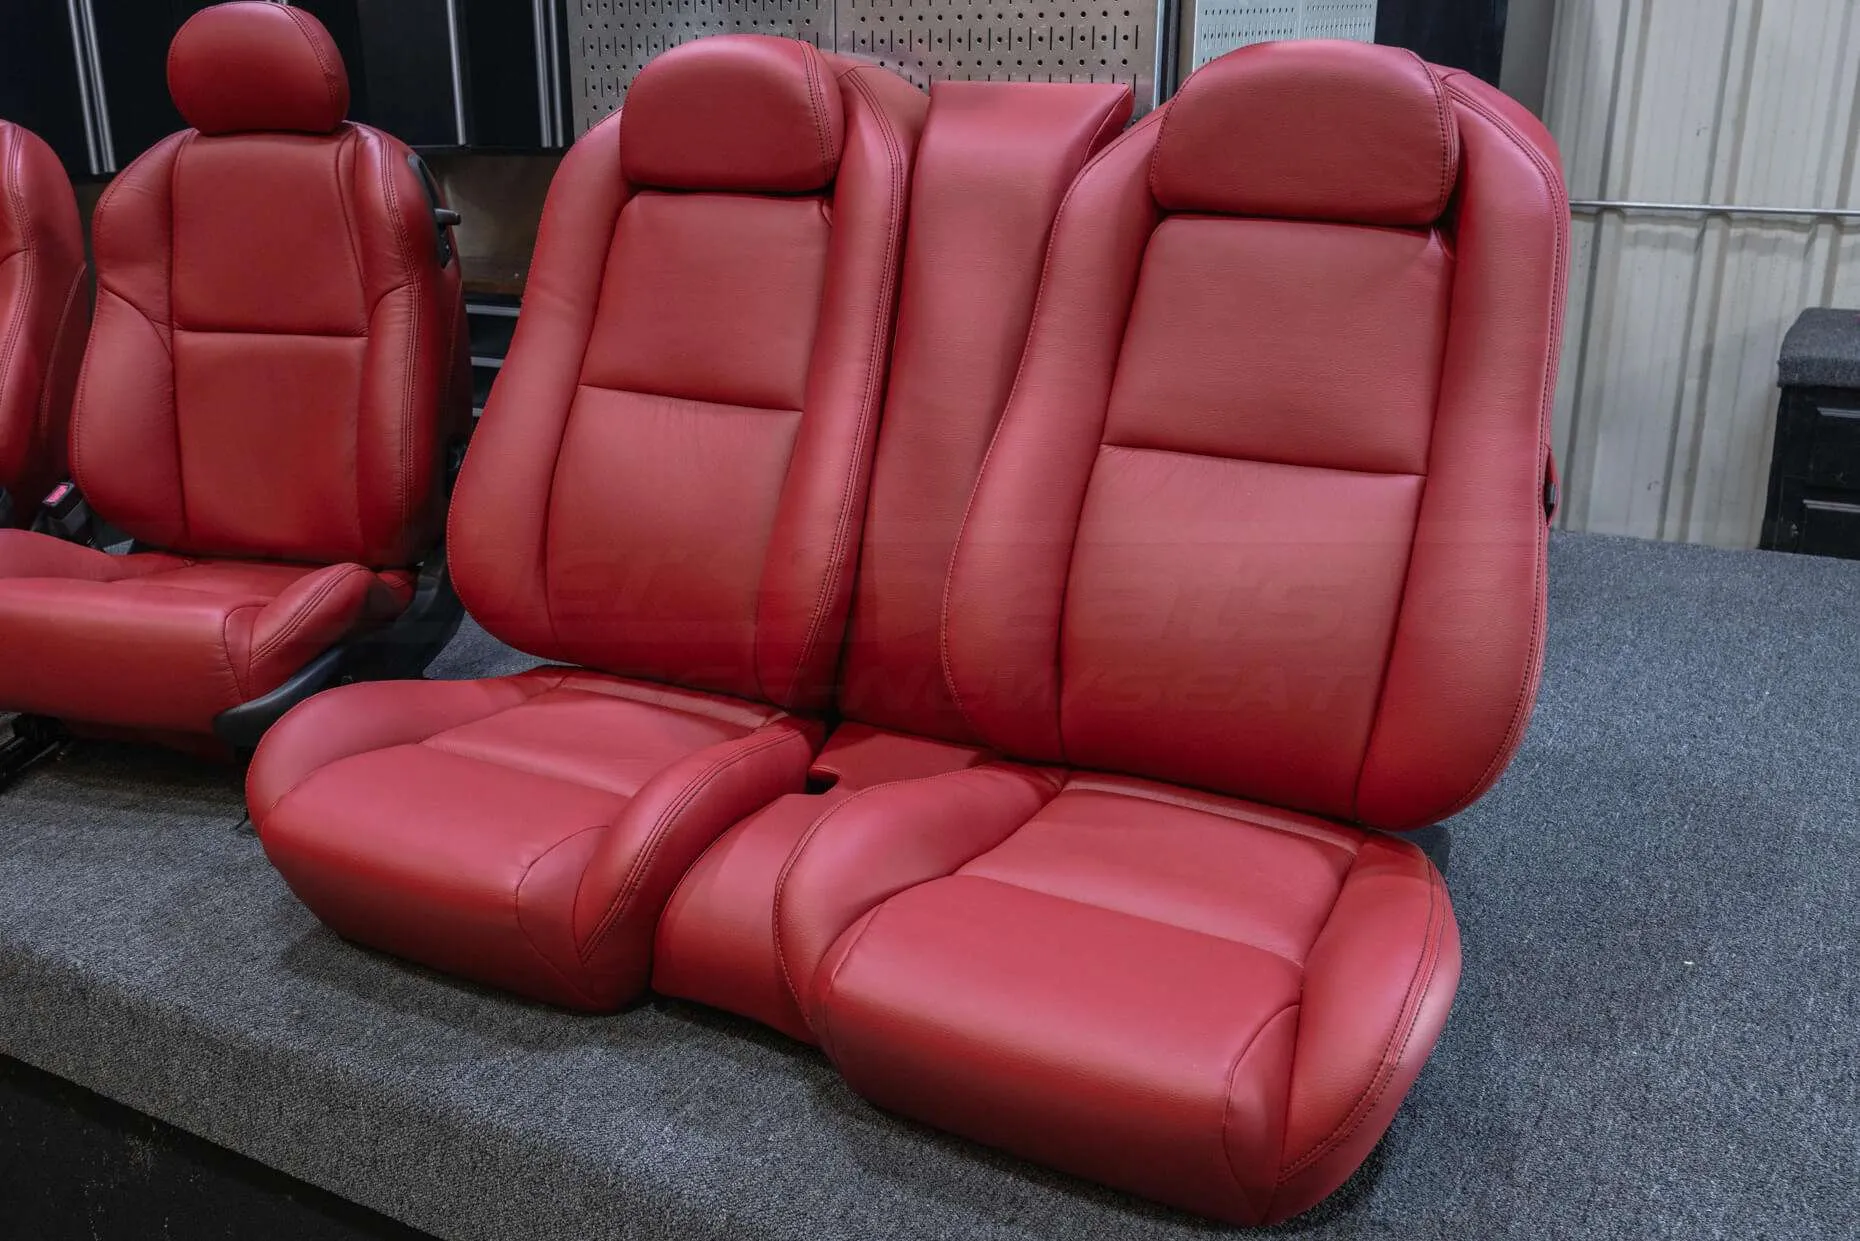 Pontiac GTO Cardinal Rear Leather Seats Installed